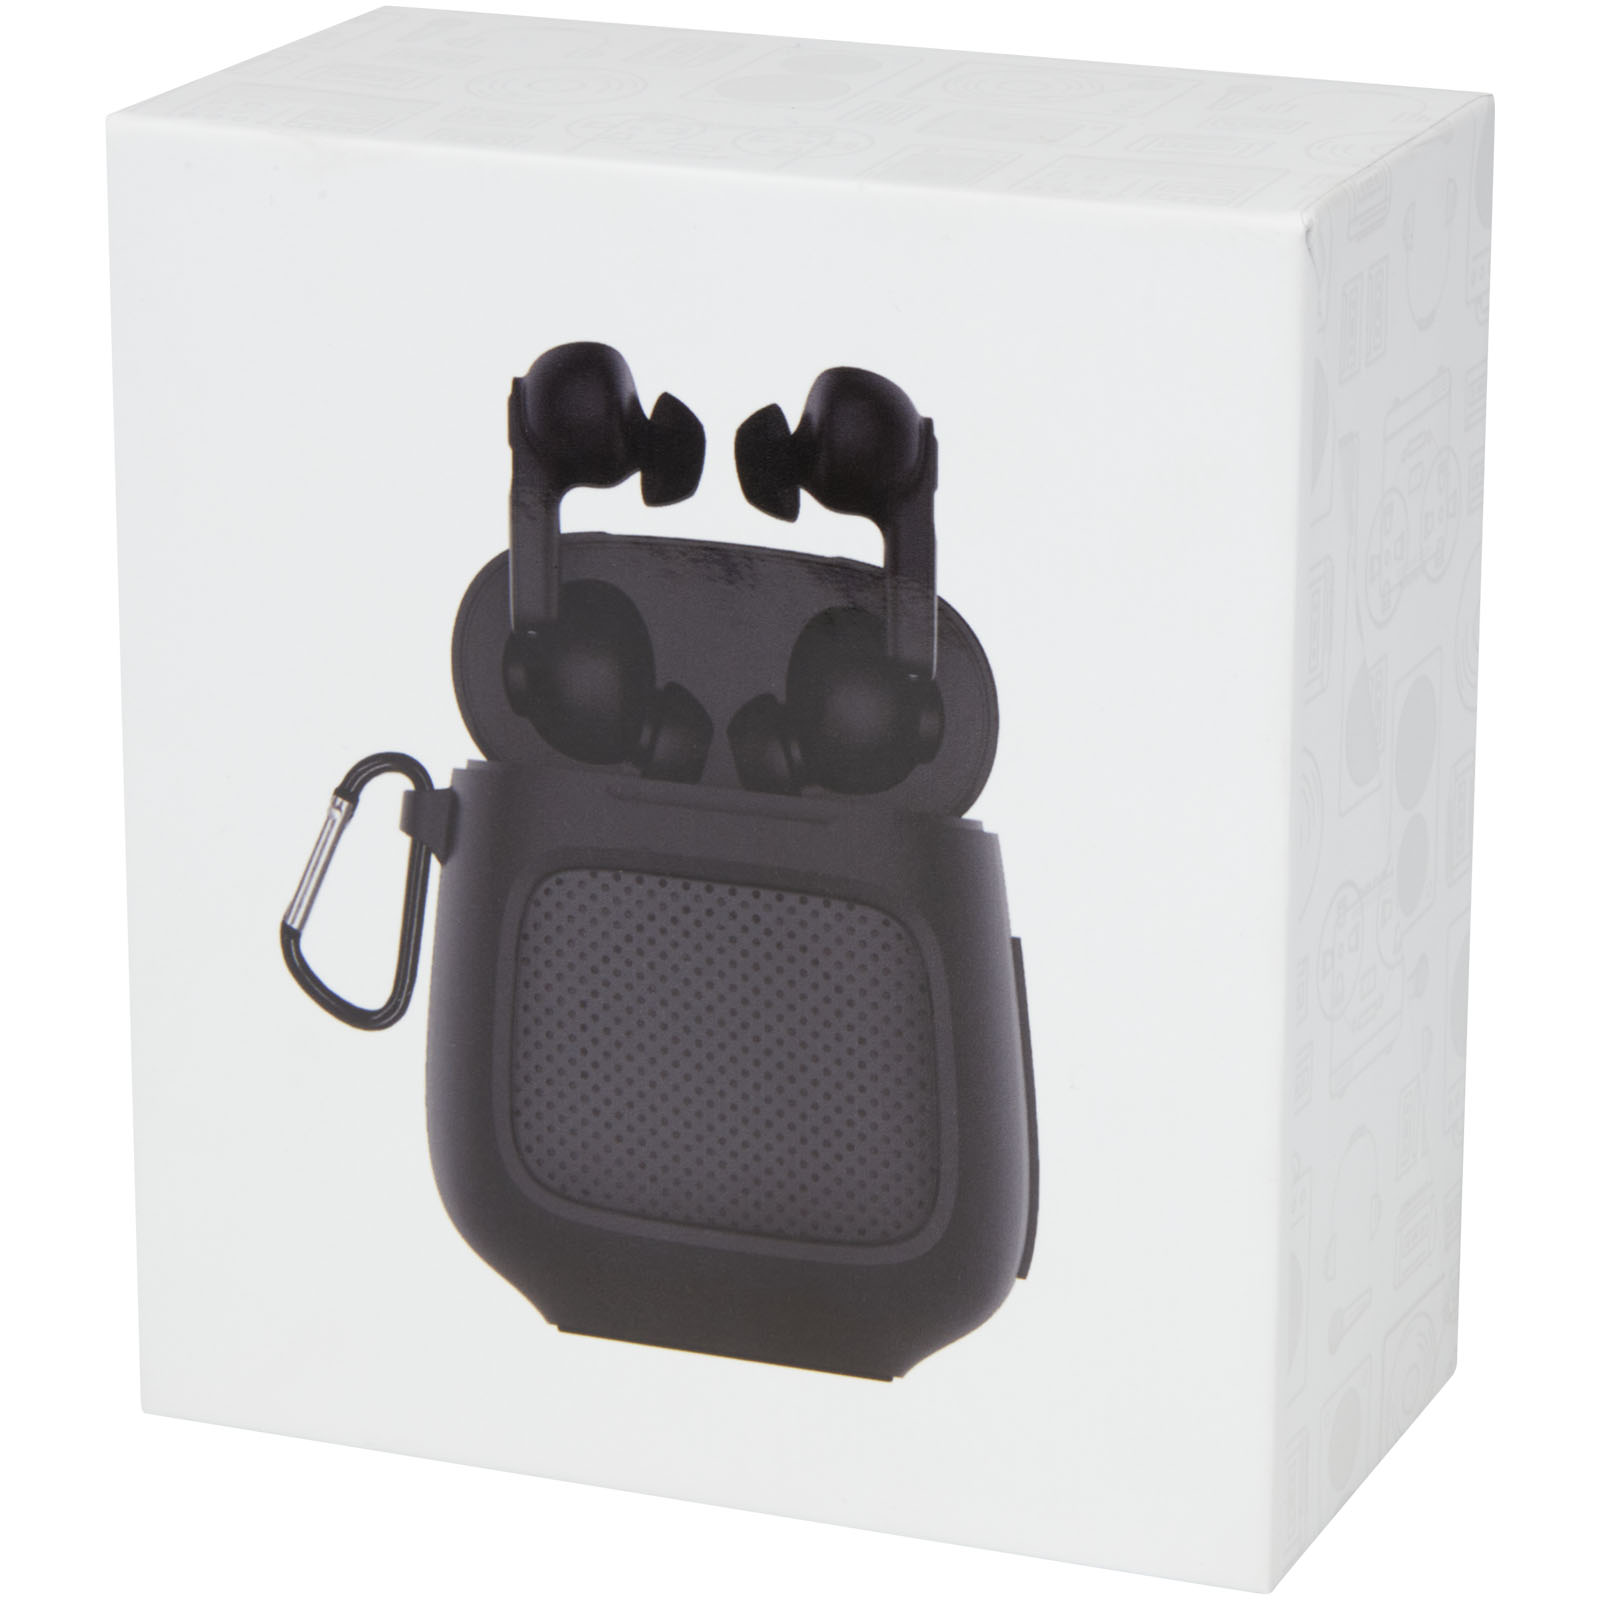 Advertising Speakers - Remix auto pair True Wireless earbuds and speaker - 1